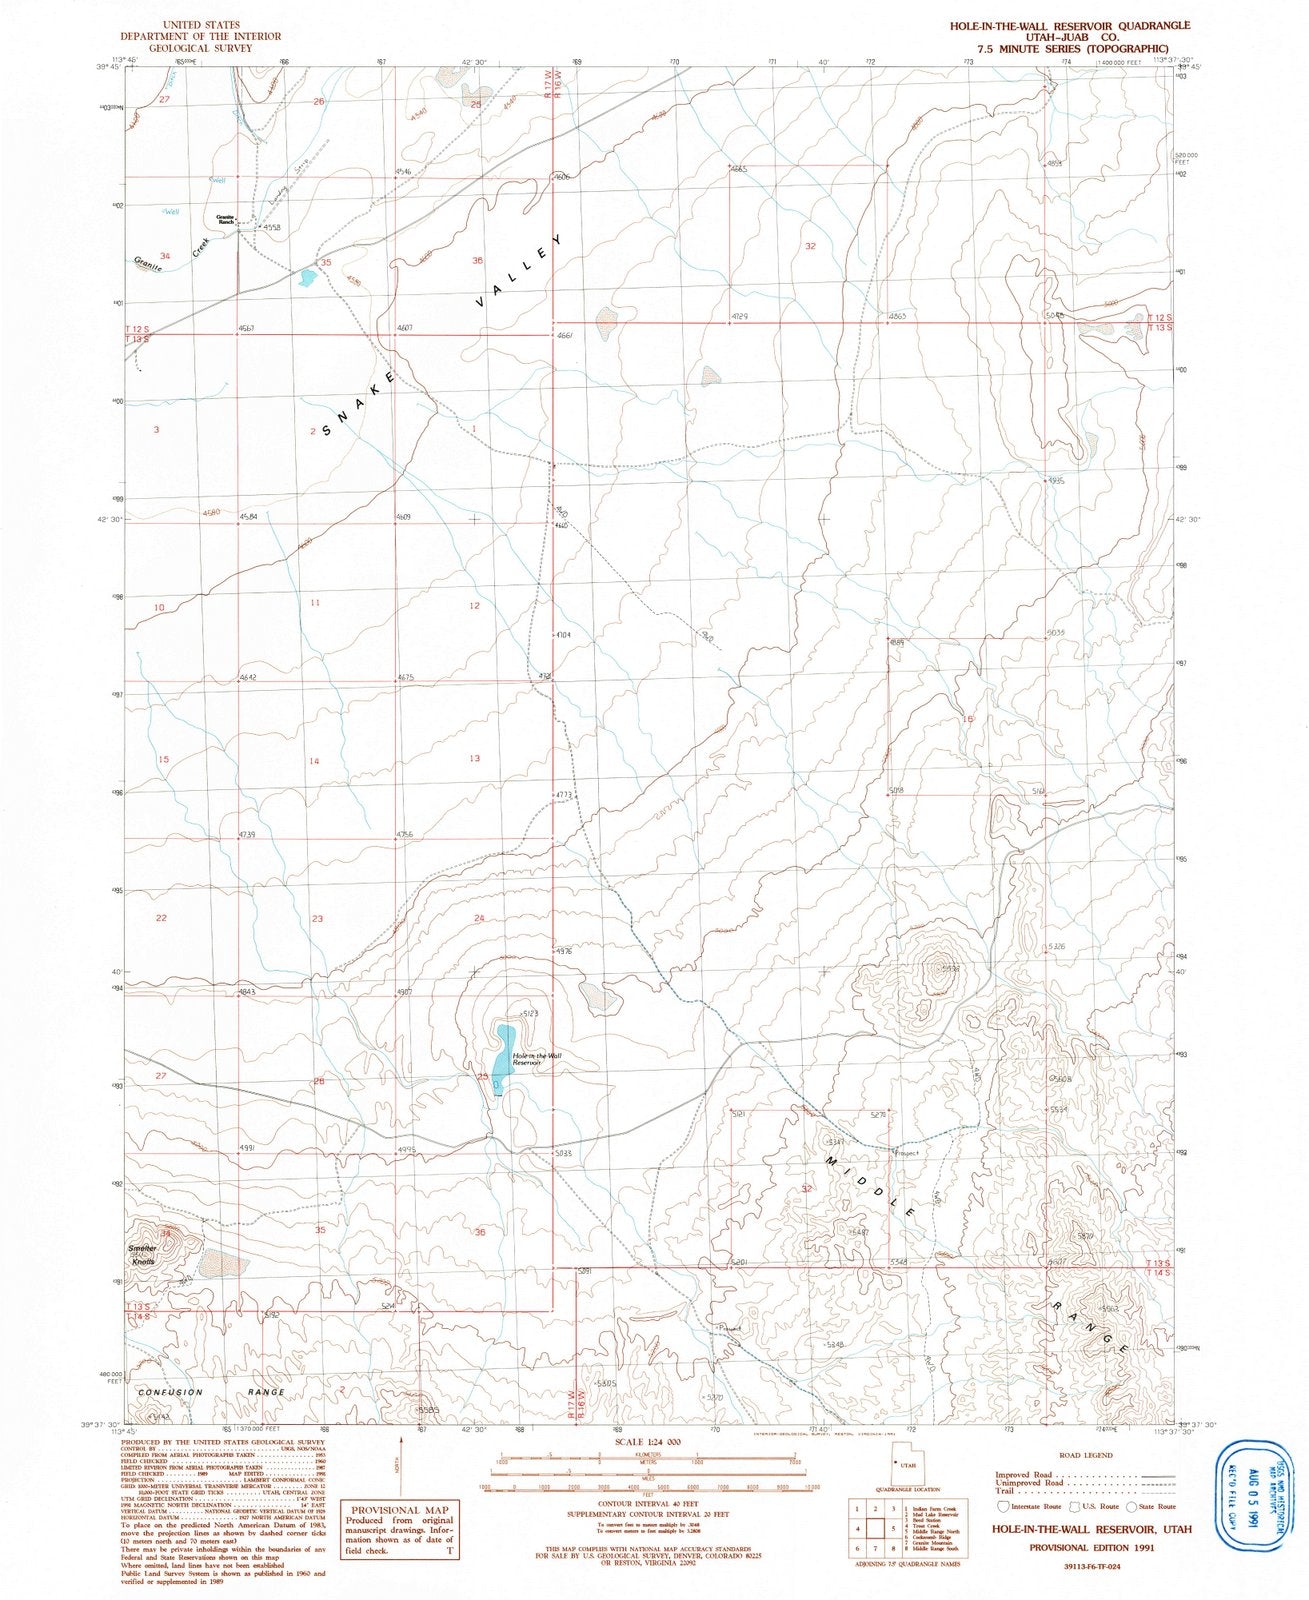 1991 Hole, UT - Indiana - USGS Topographic Map